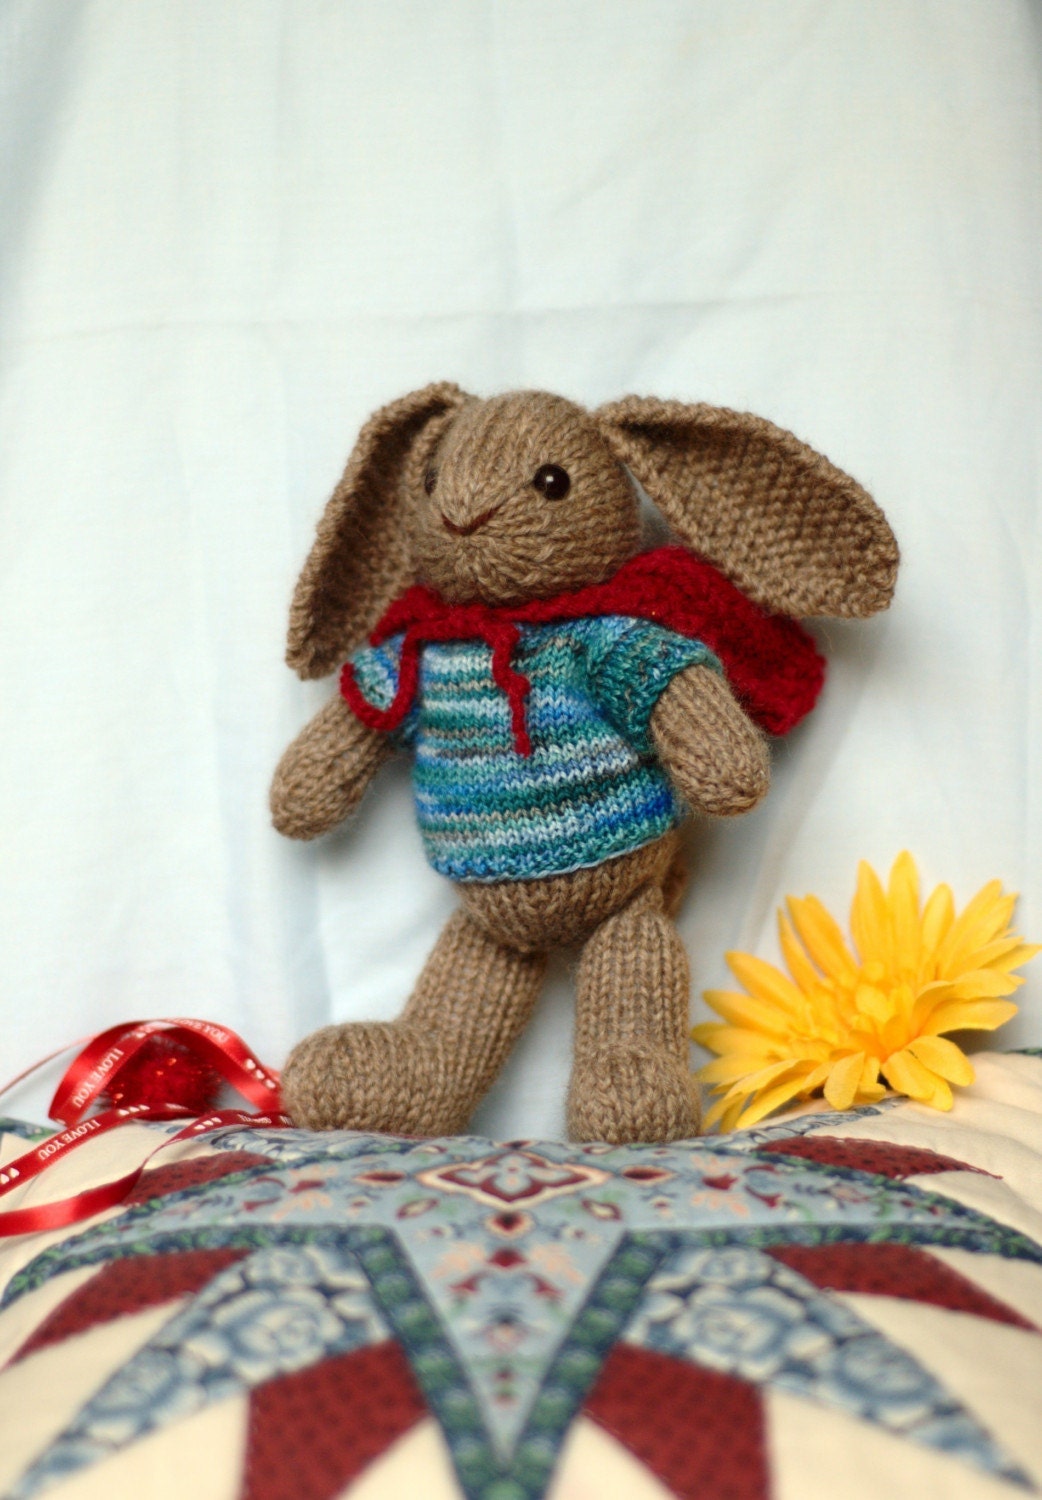 Fun Knitting Pattern | My House Rabbit's Blog